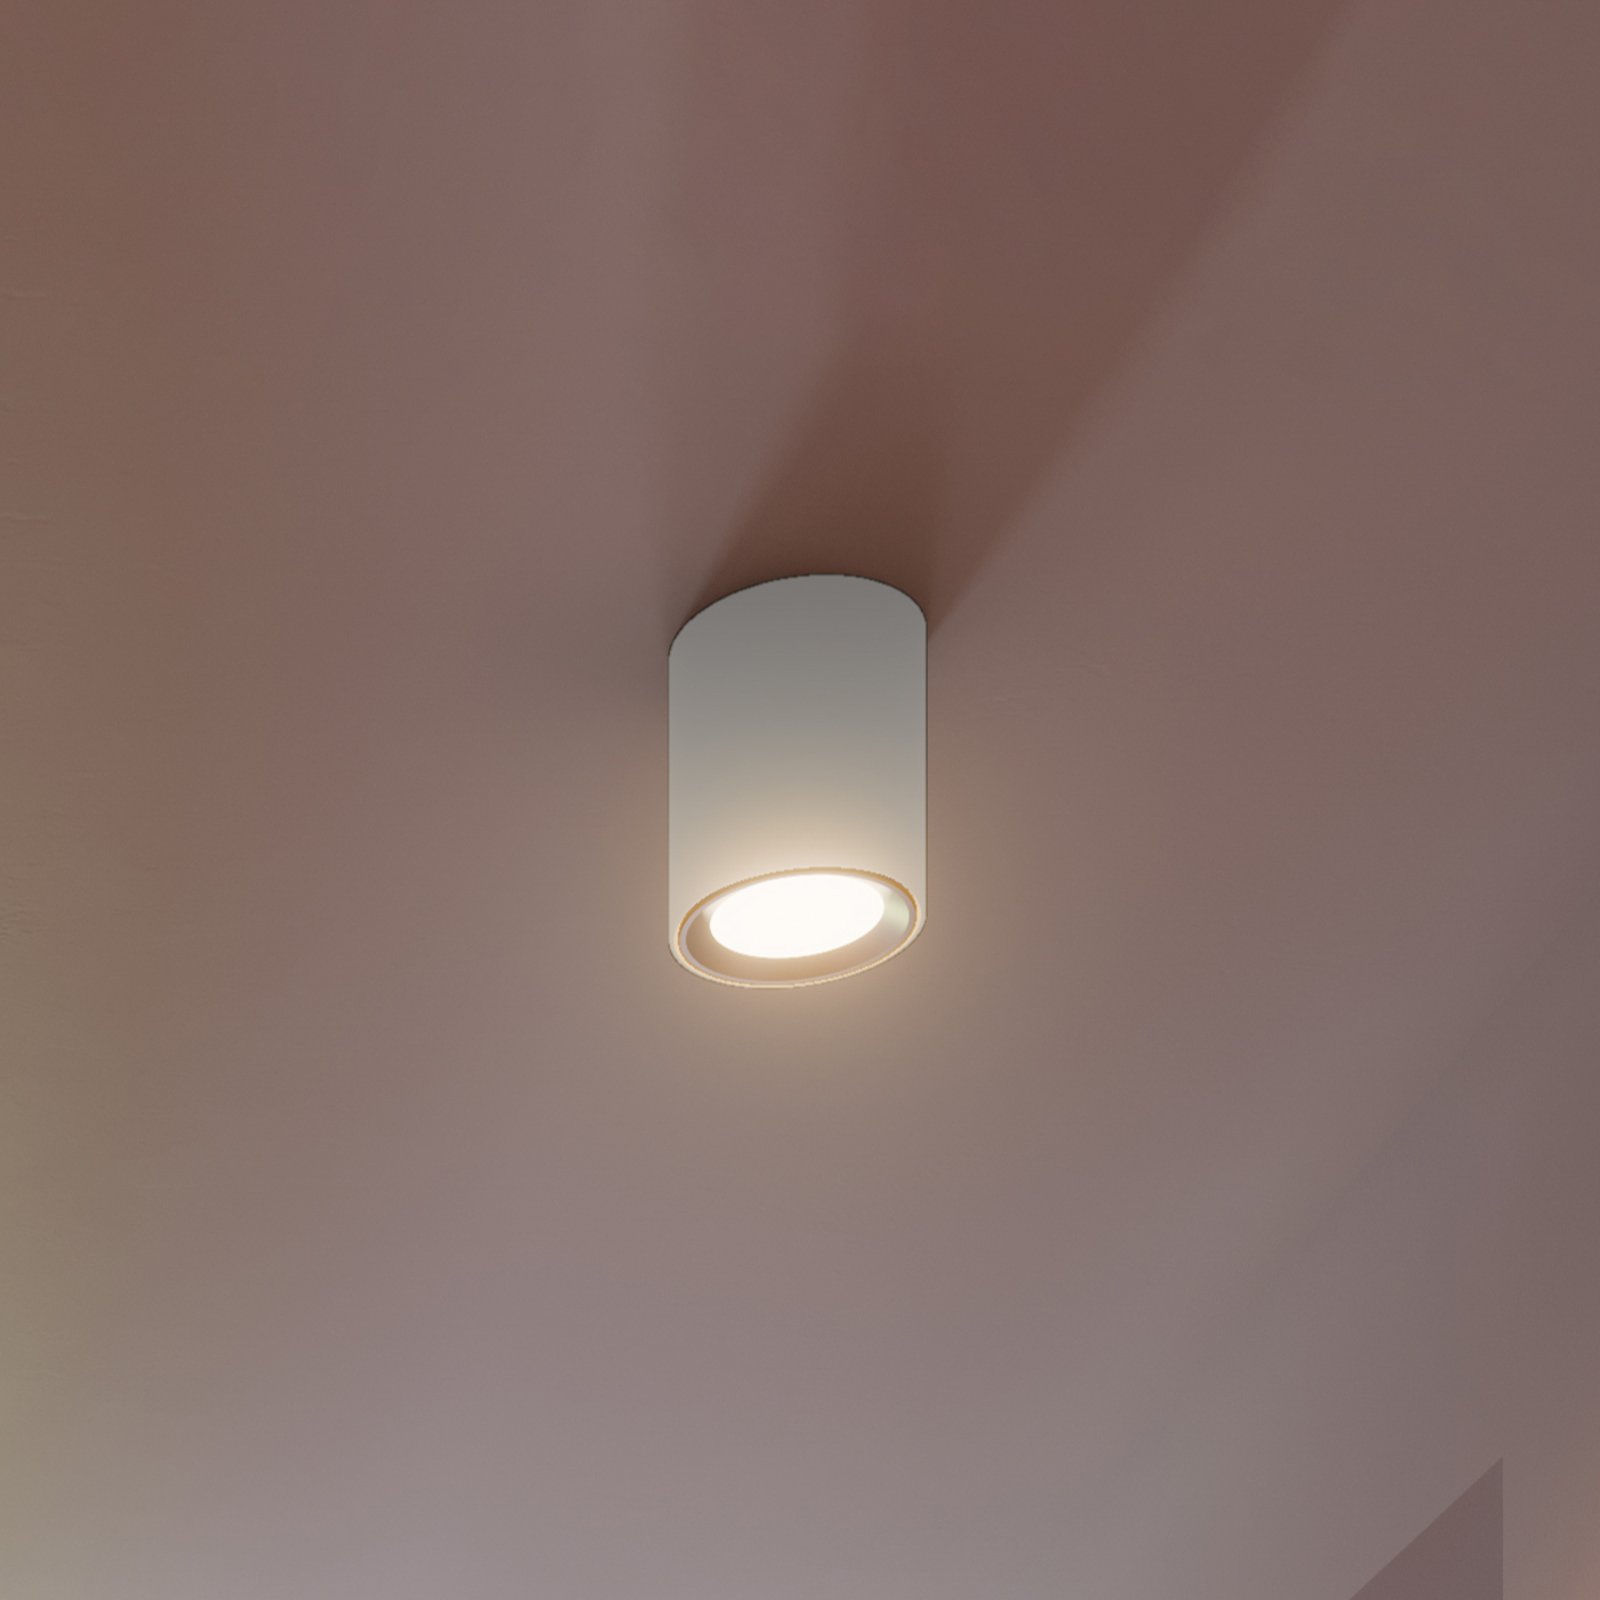 Spot LED soffitto Landon Smart, bianco, alto 14 cm